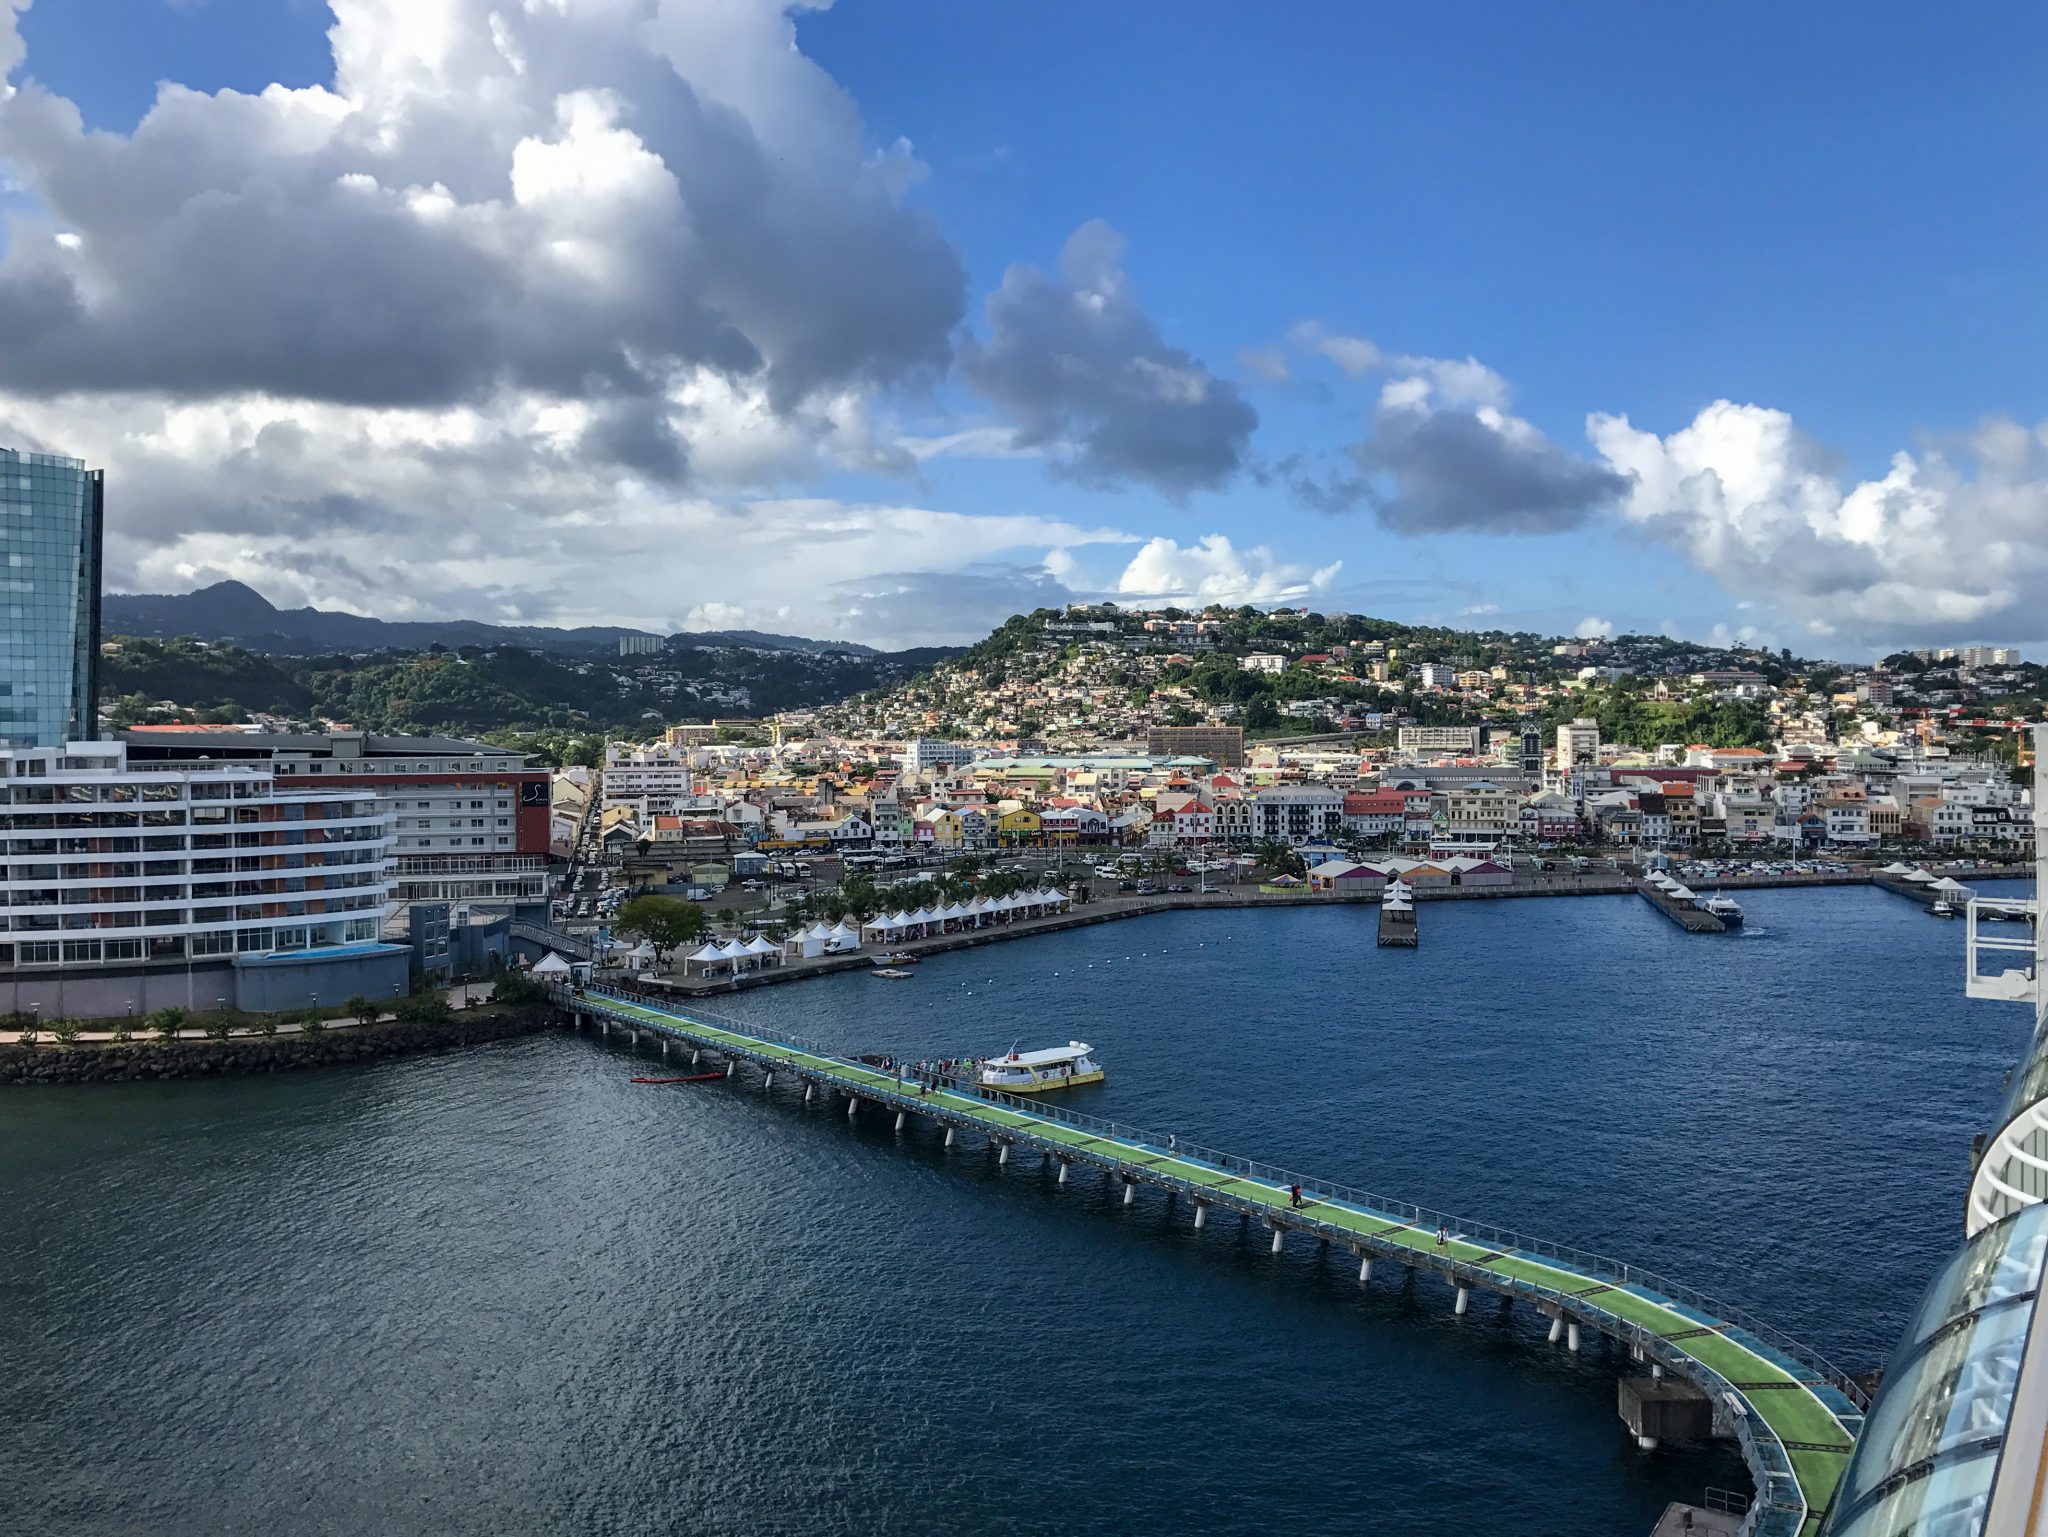 Fort de France cruise port in Martinique